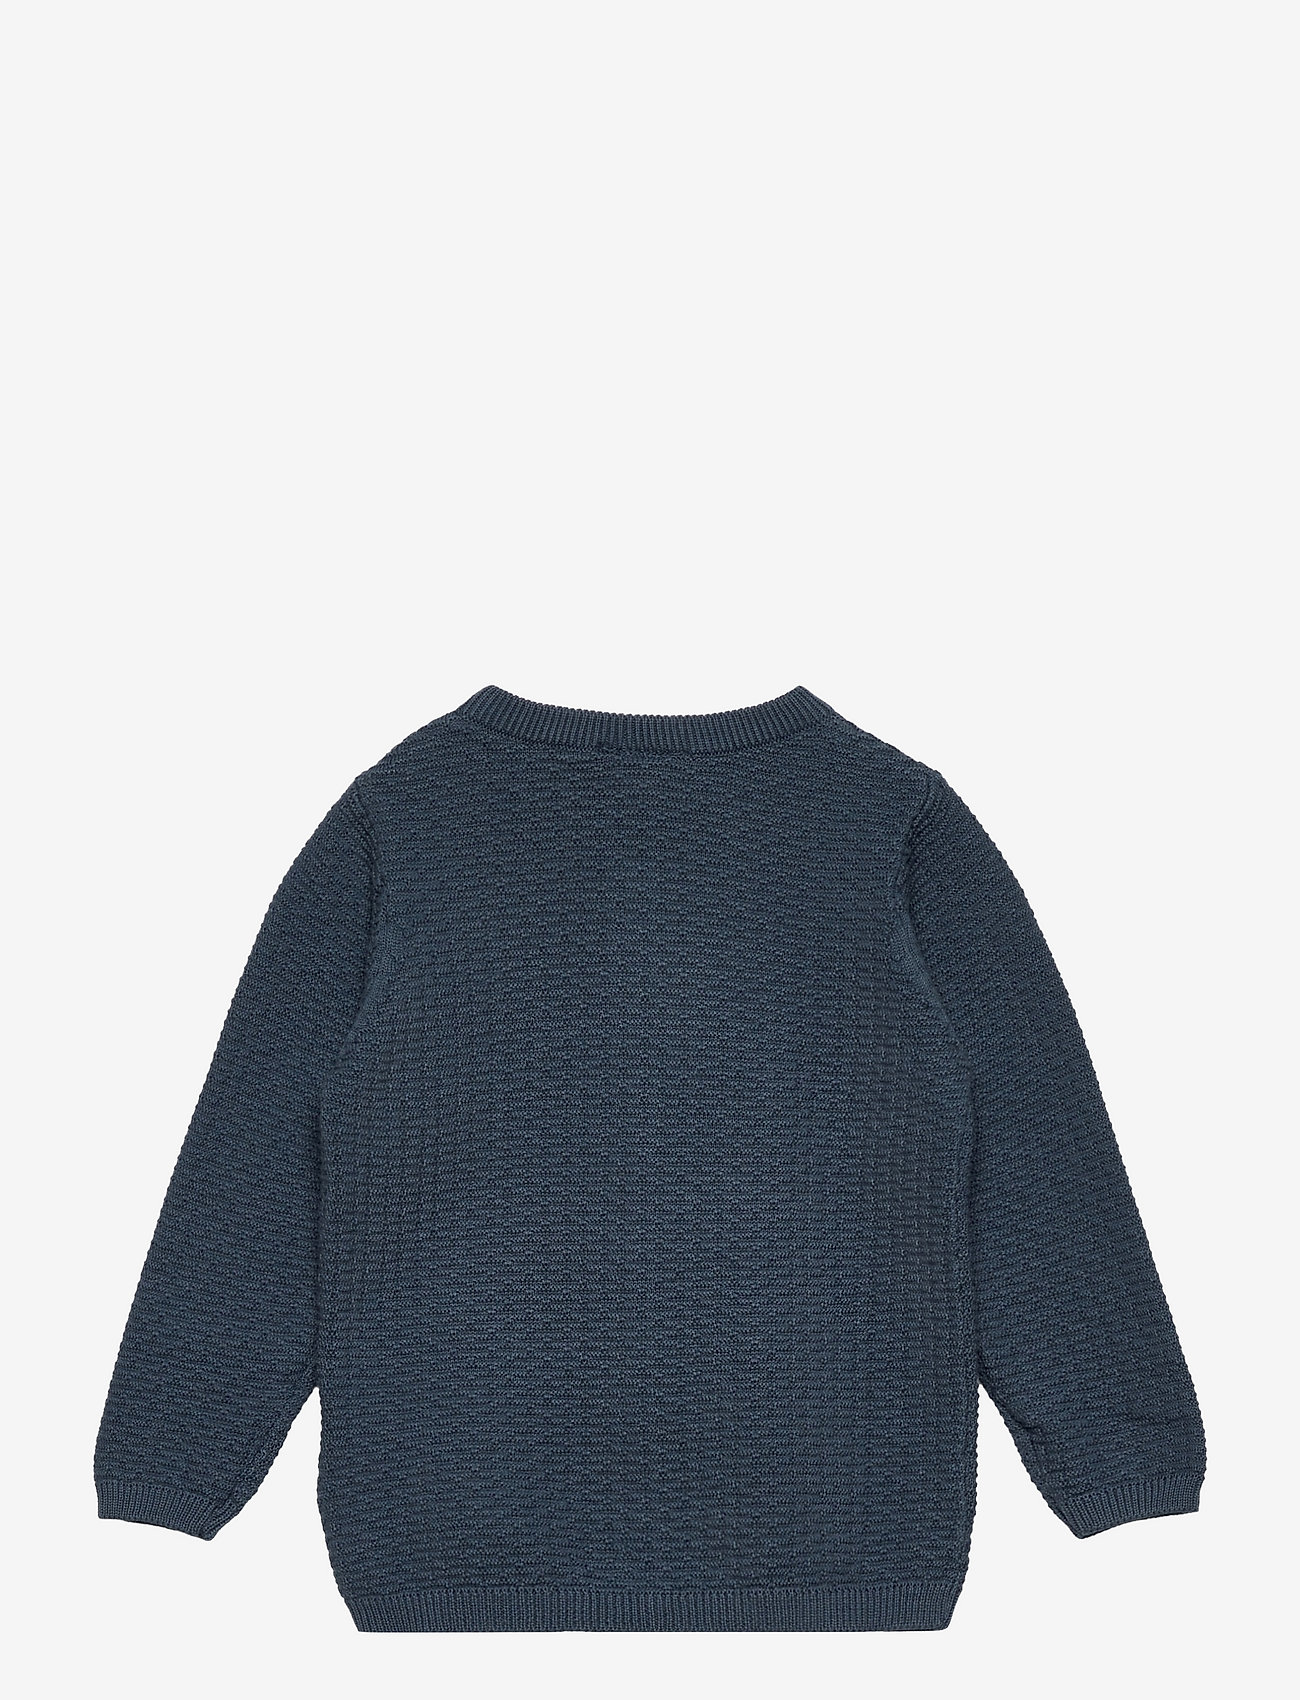 Fixoni - Knitted Cardigan - gebreide vesten - china blue - 1